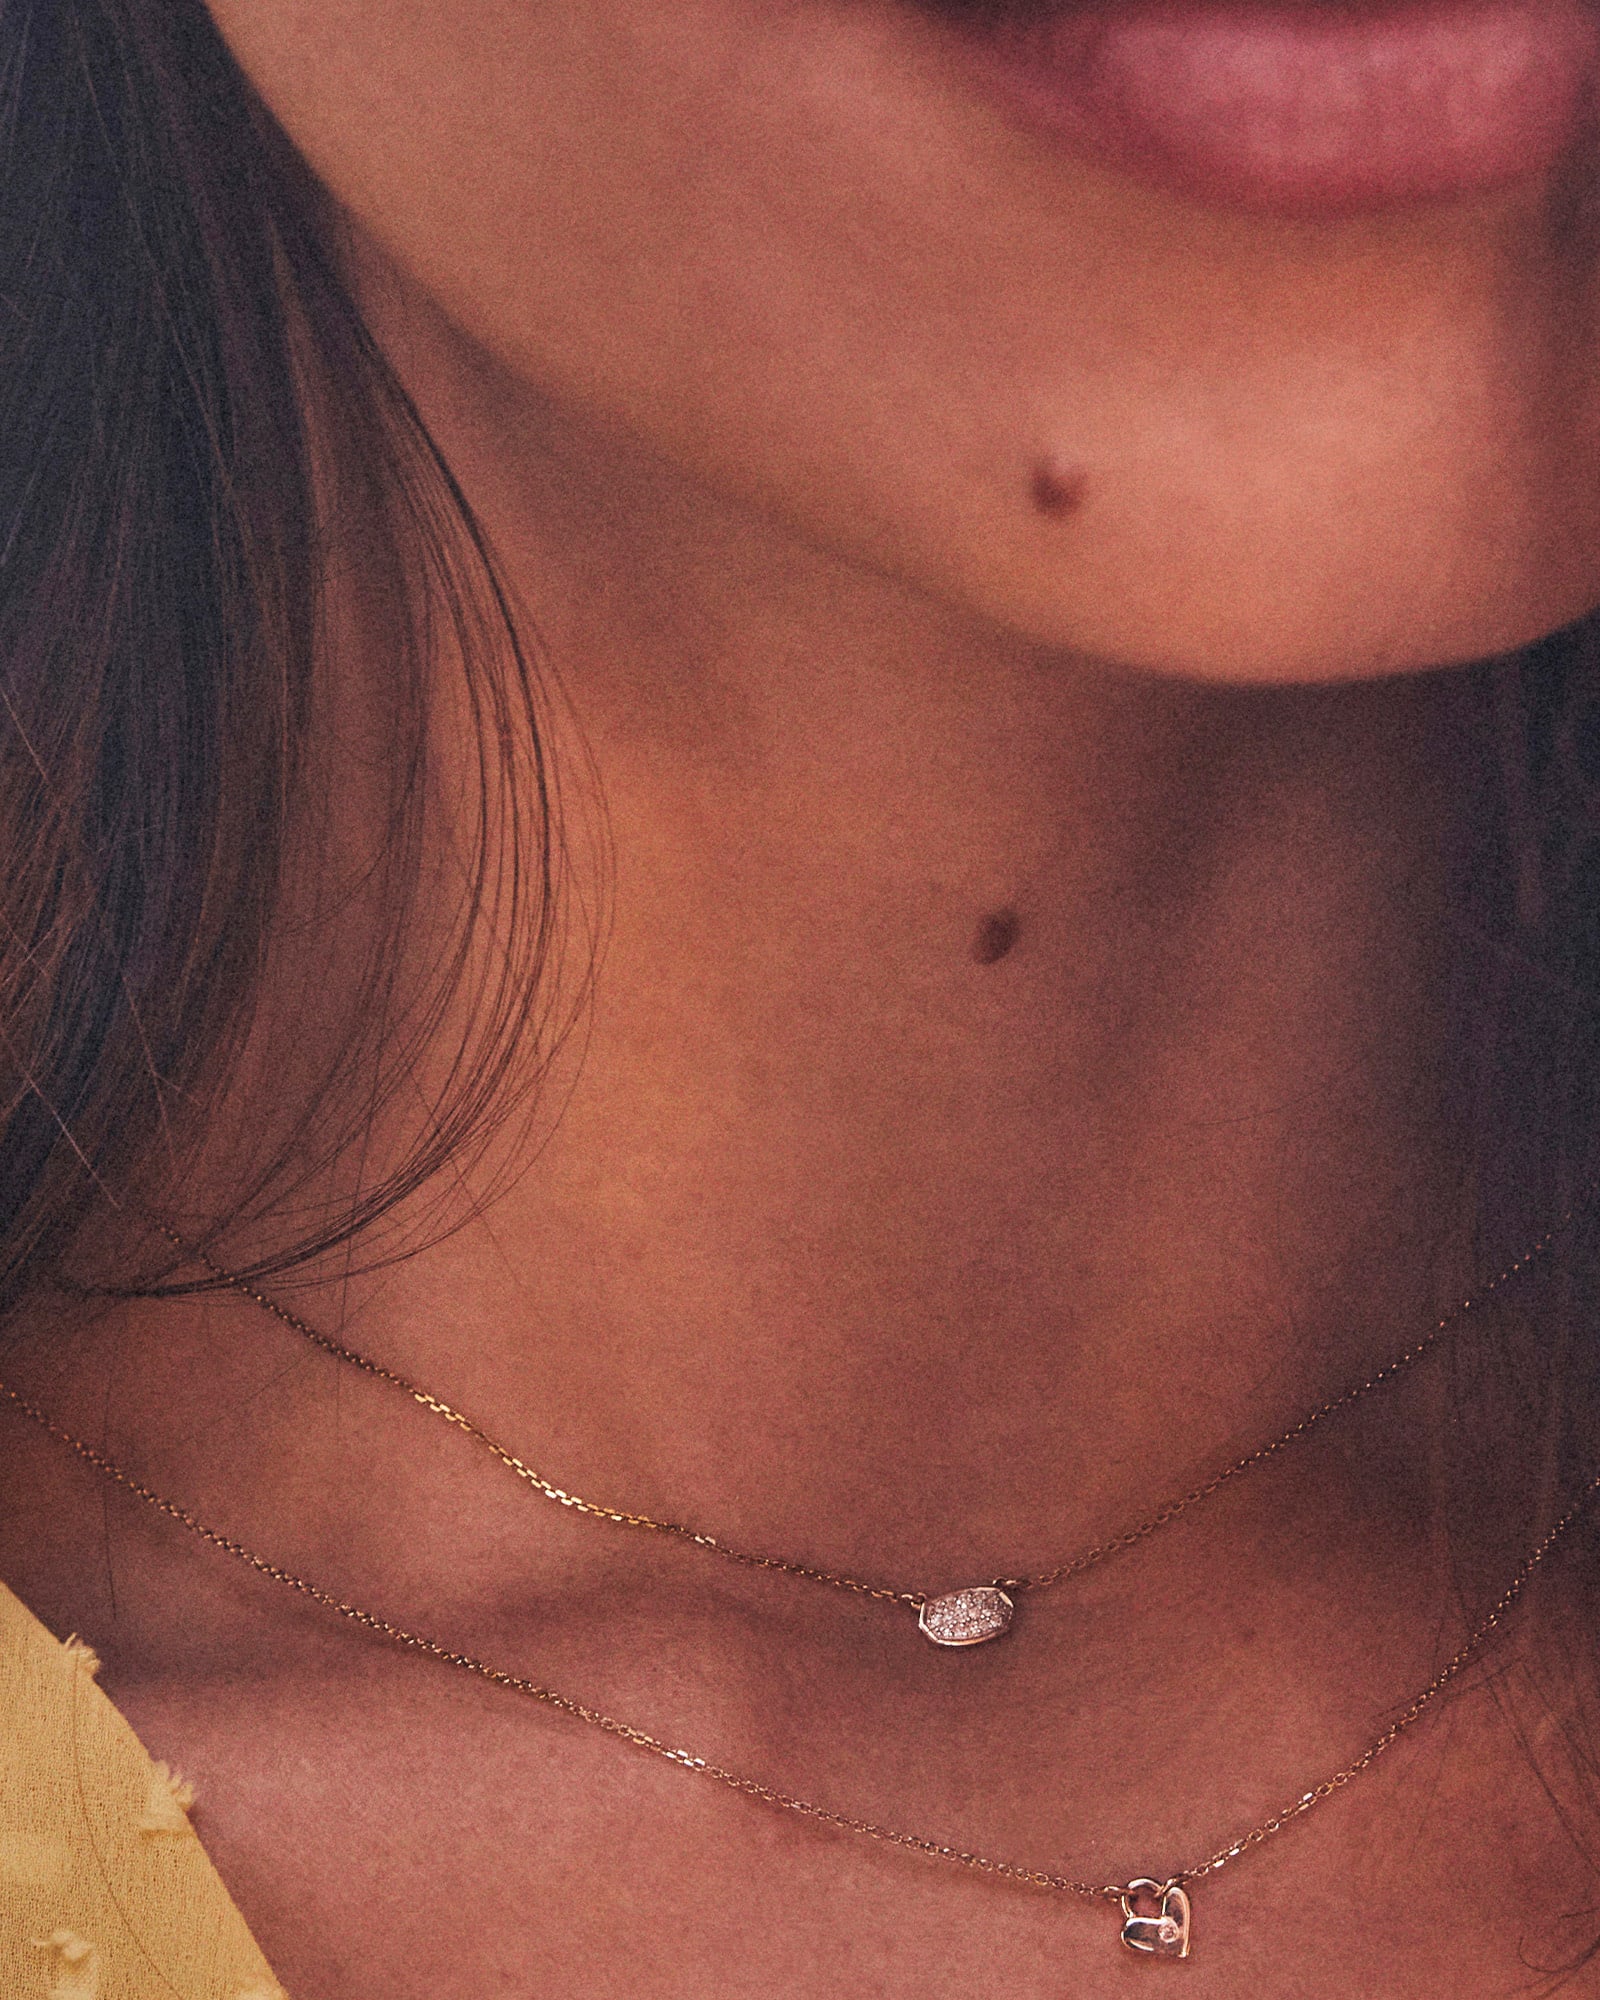 Tiny Heart Padlock 14k Gold Pendant Necklace in White Diamond